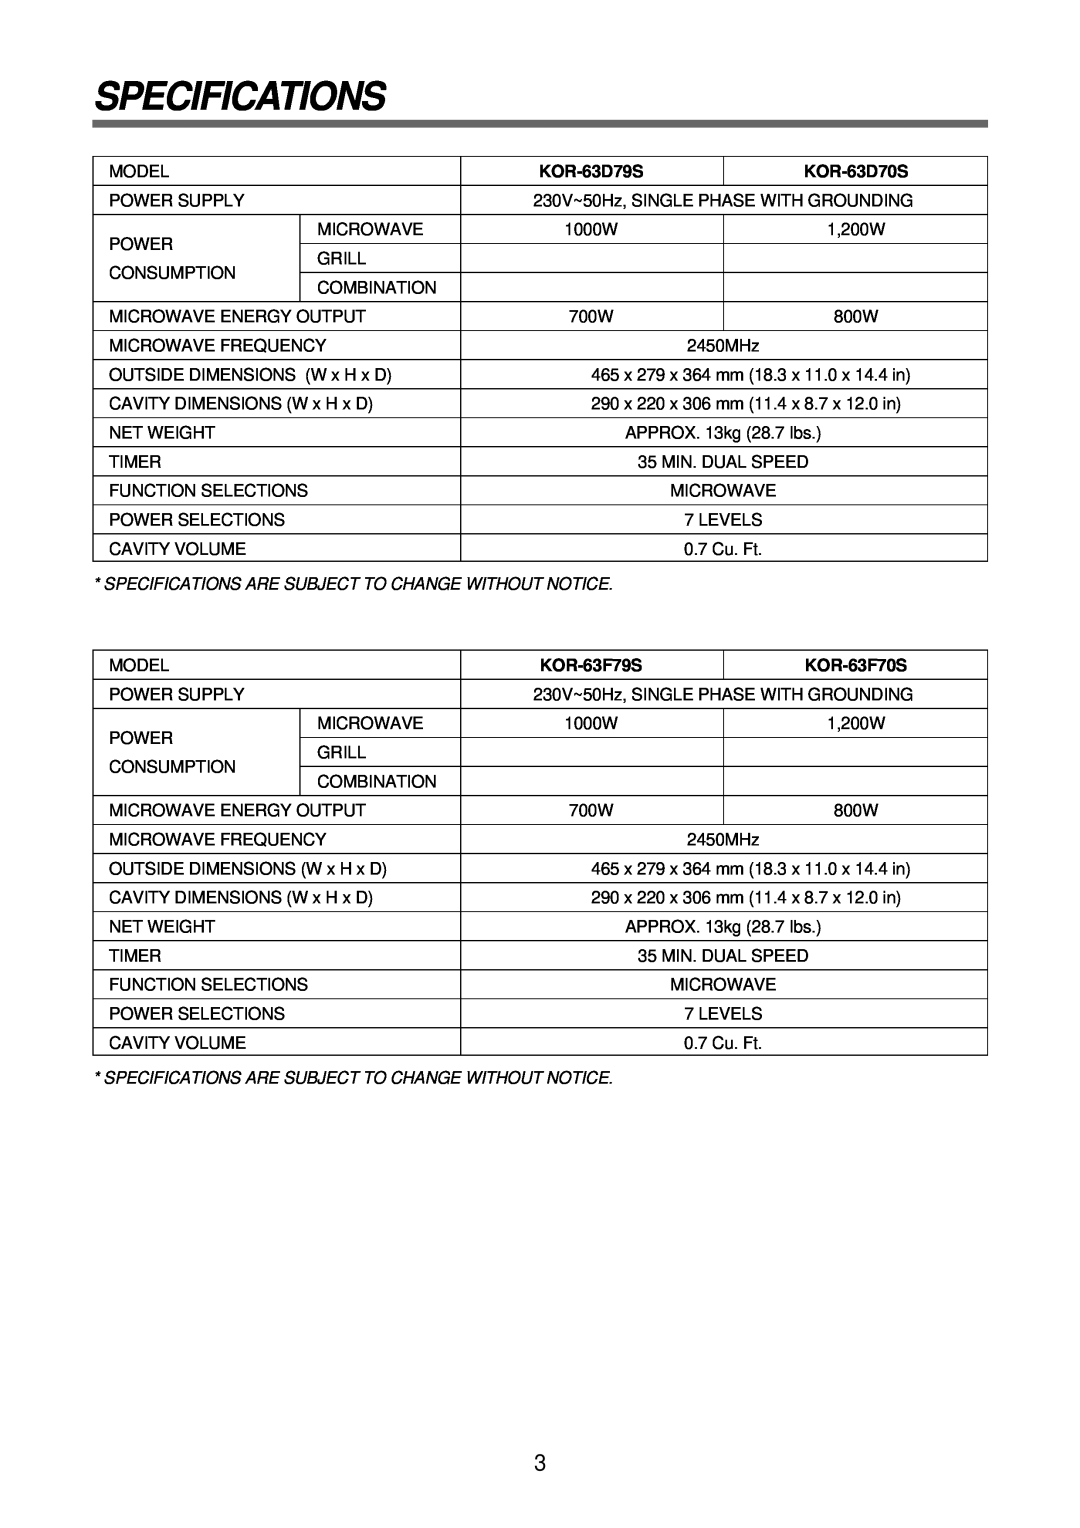 Daewoo KOR-63F79S service manual Specifications, KOR-63D79S, KOR-63D70S, KOR-63F70S 